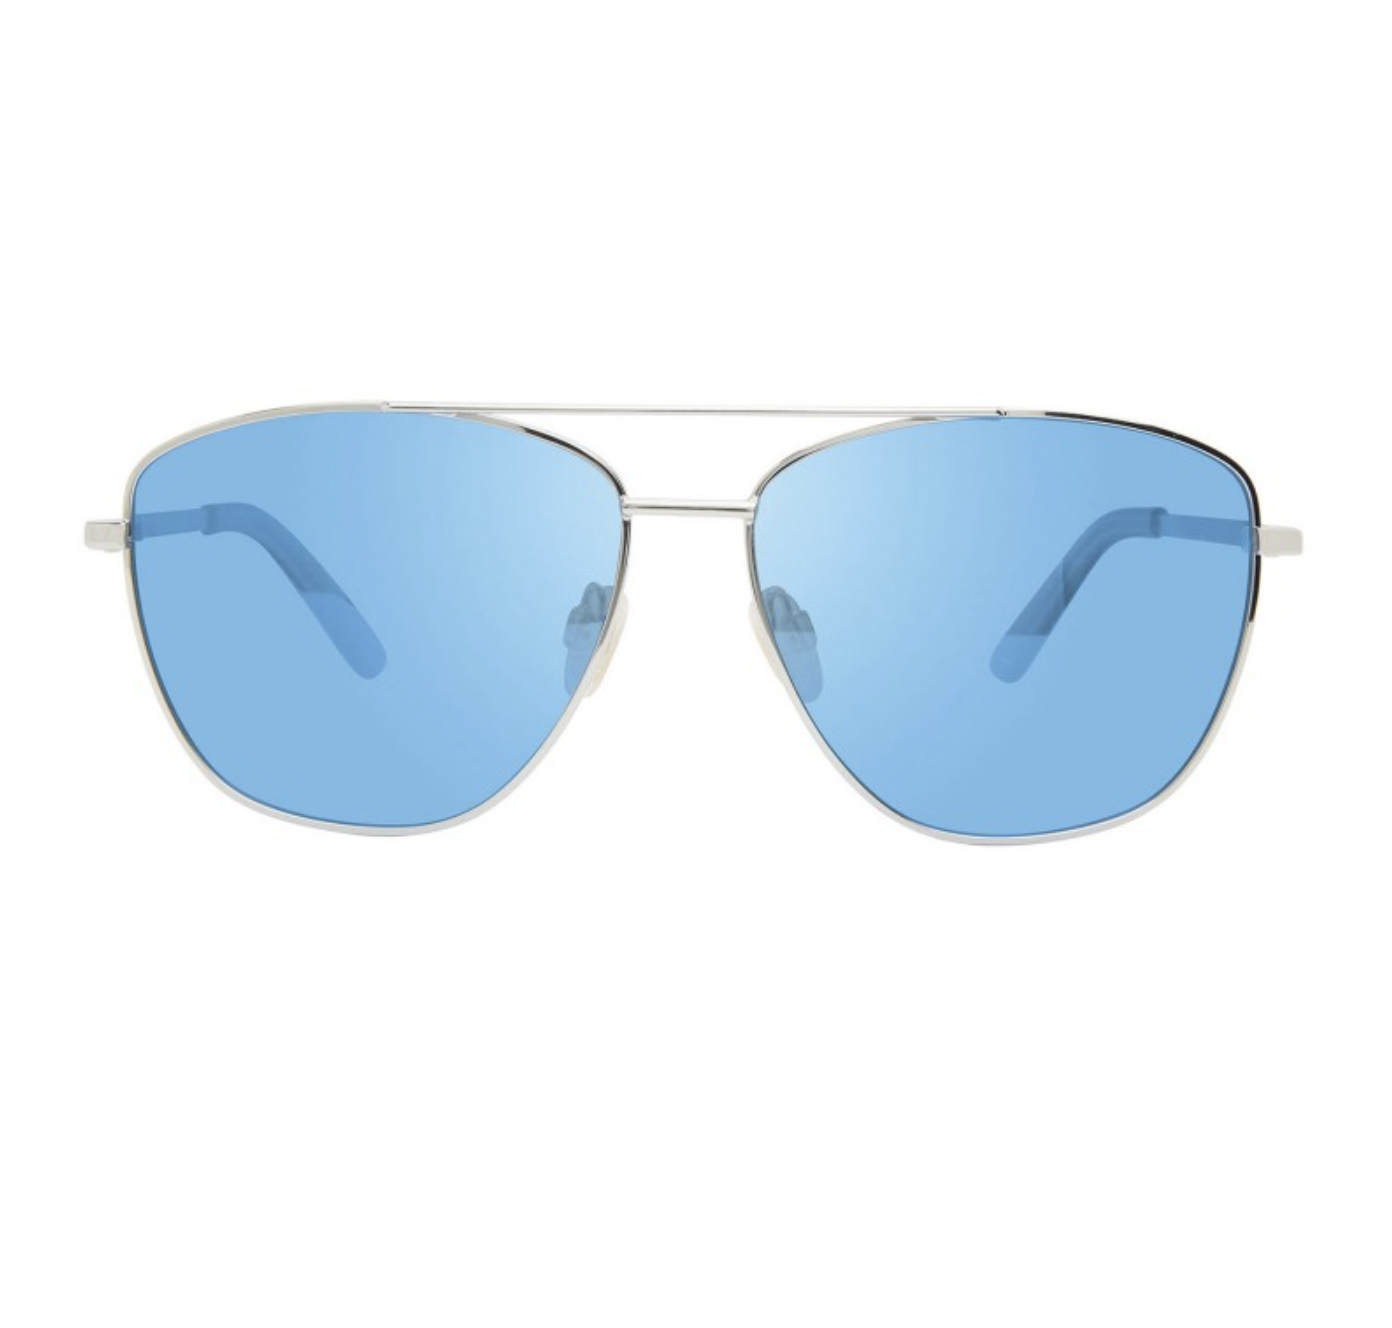 Aggregate 171+ cool sunglasses for men latest